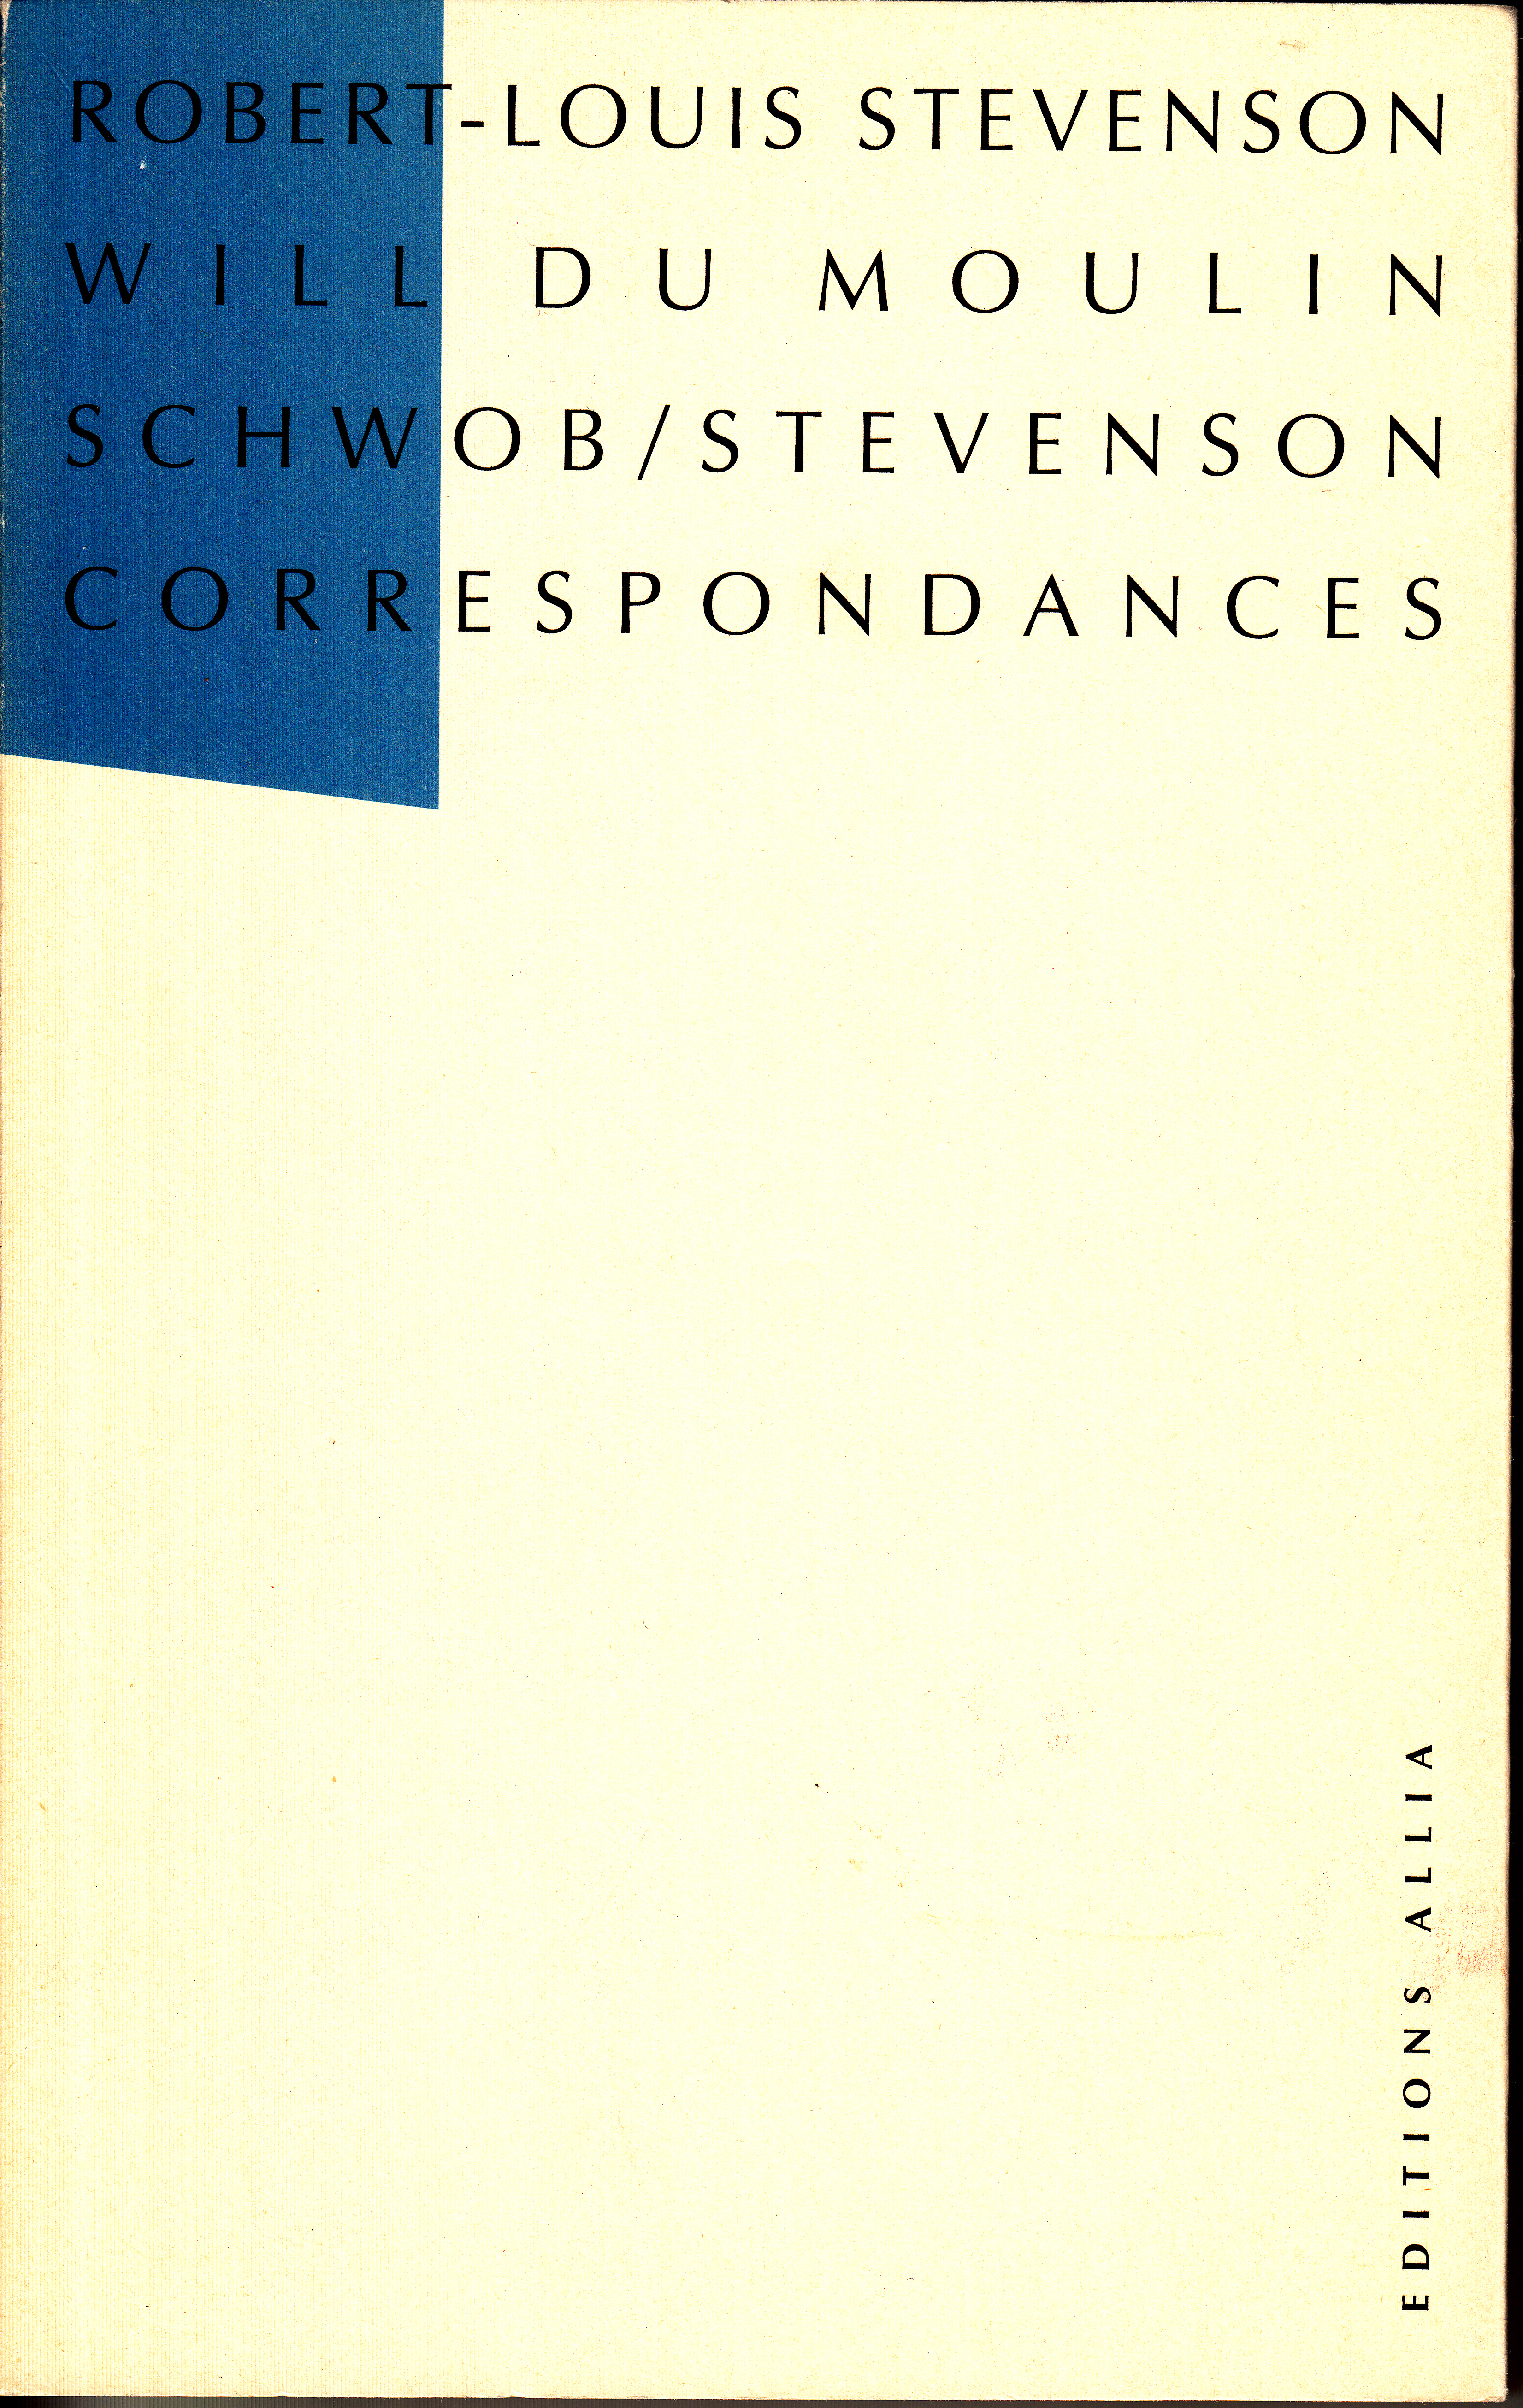 Correspondances Schwob / Stevenson